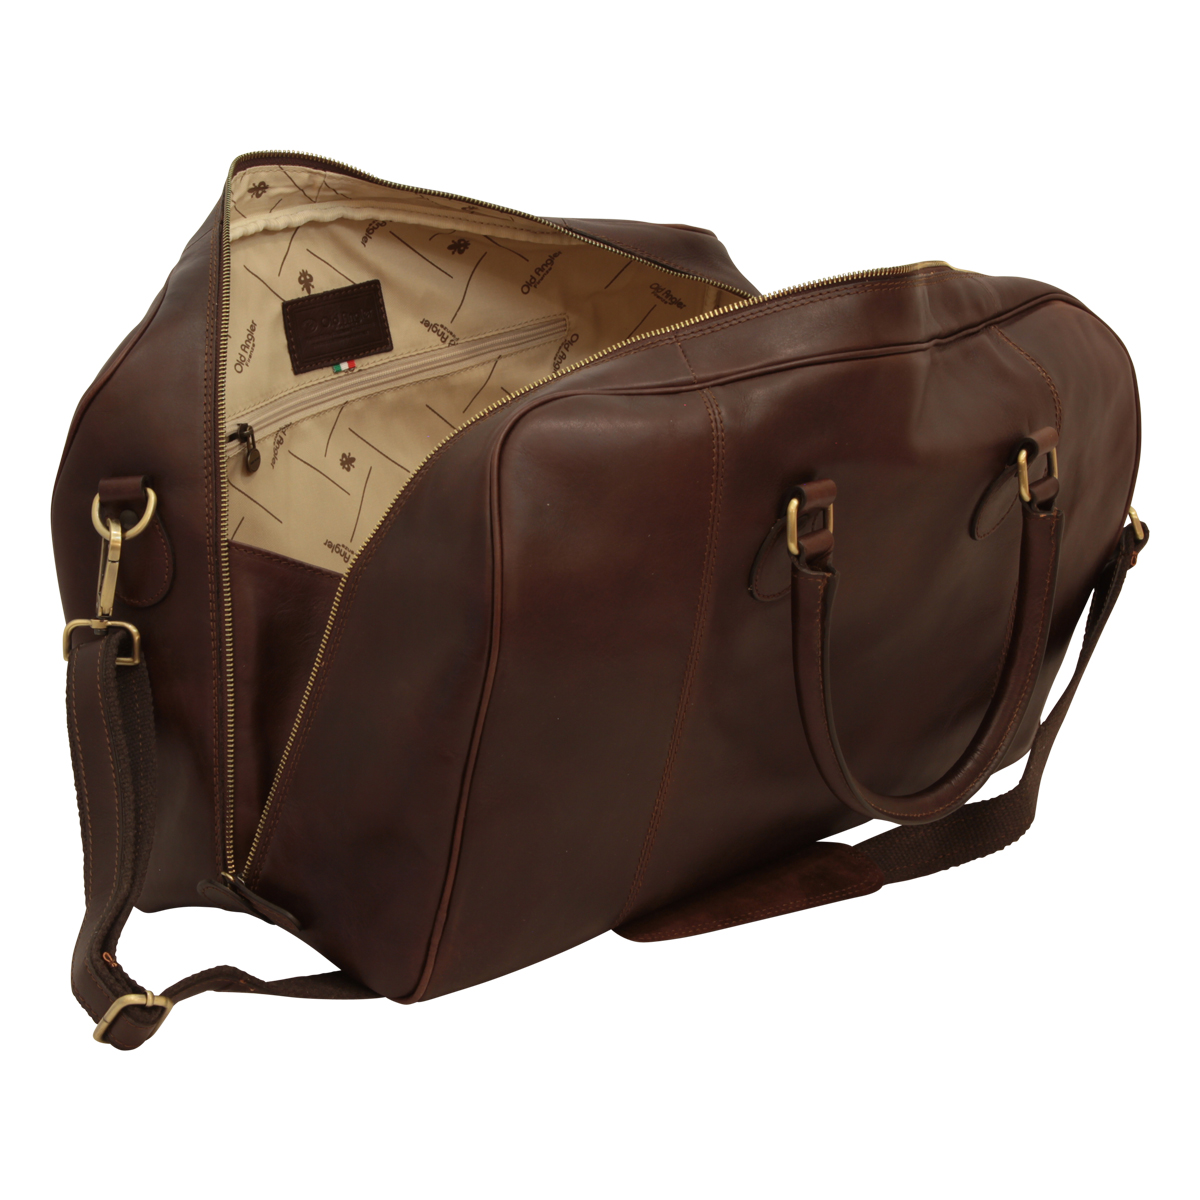 Leather Duffel Bag - Dark Brown | 404289TM UK | Old Angler Firenze